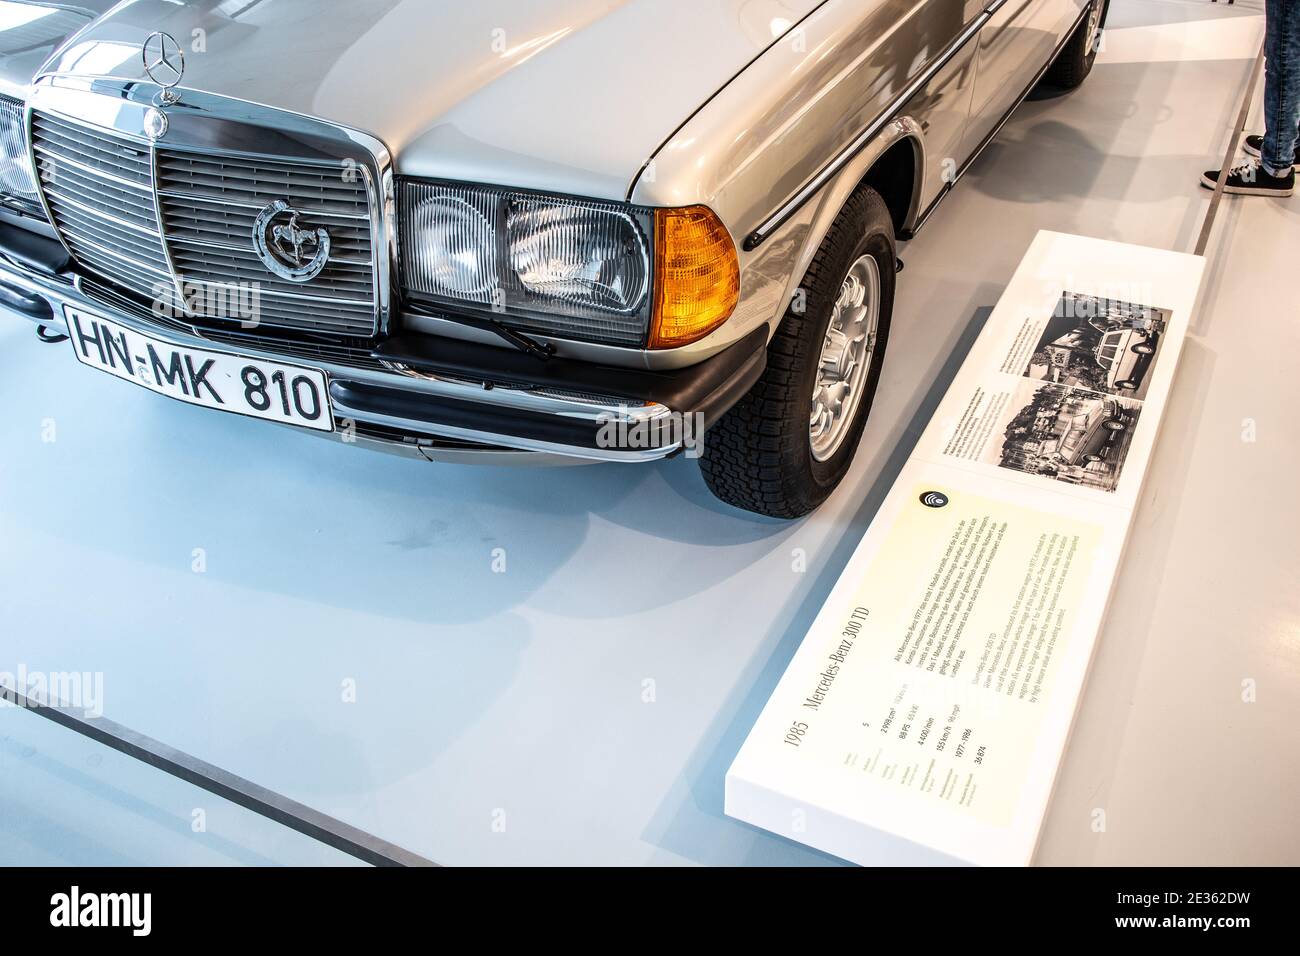 STUTTGART, GERMANY, 2019: 1985 Mercedes-Benz 300 TD t-model station wagon in the Mercedes-Benz Museum, HN-MK 810 Stock Photo